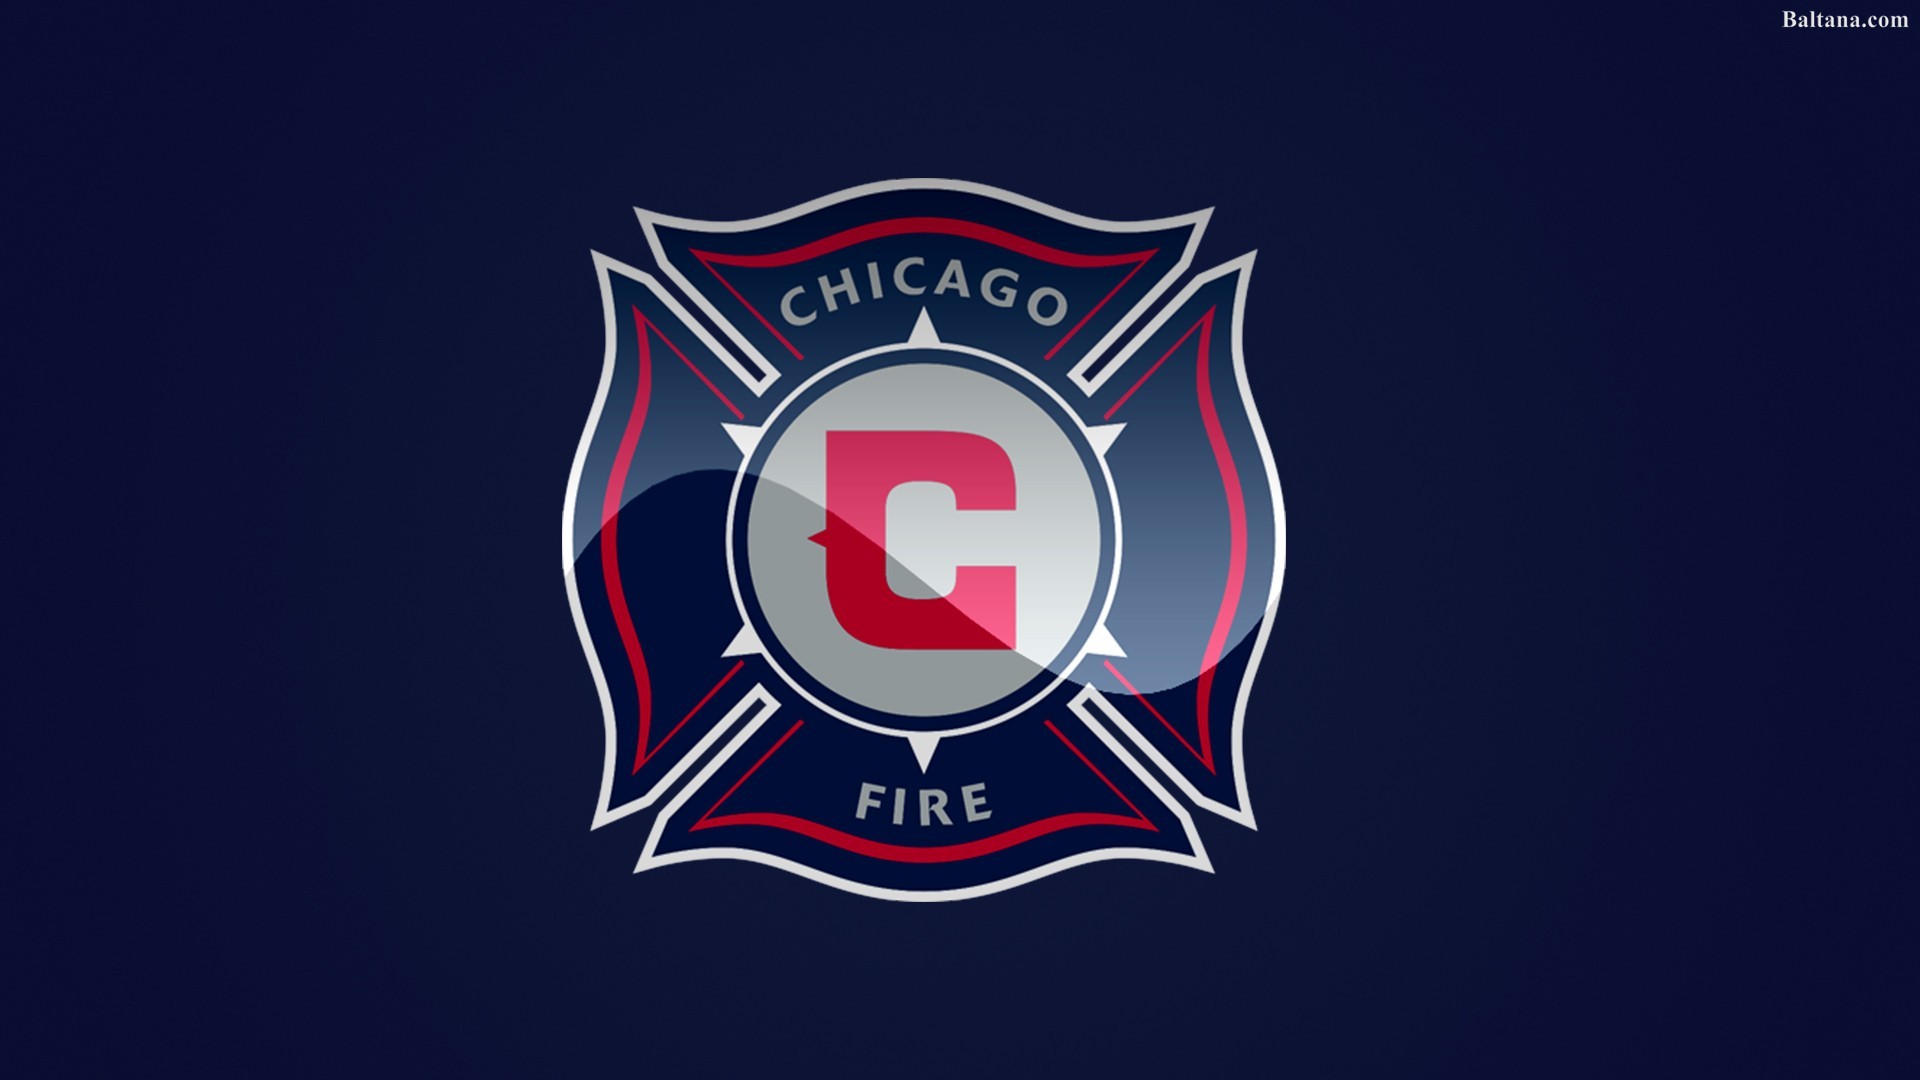 Chicago Fire Soccer Club Background Wallpaper Baltana